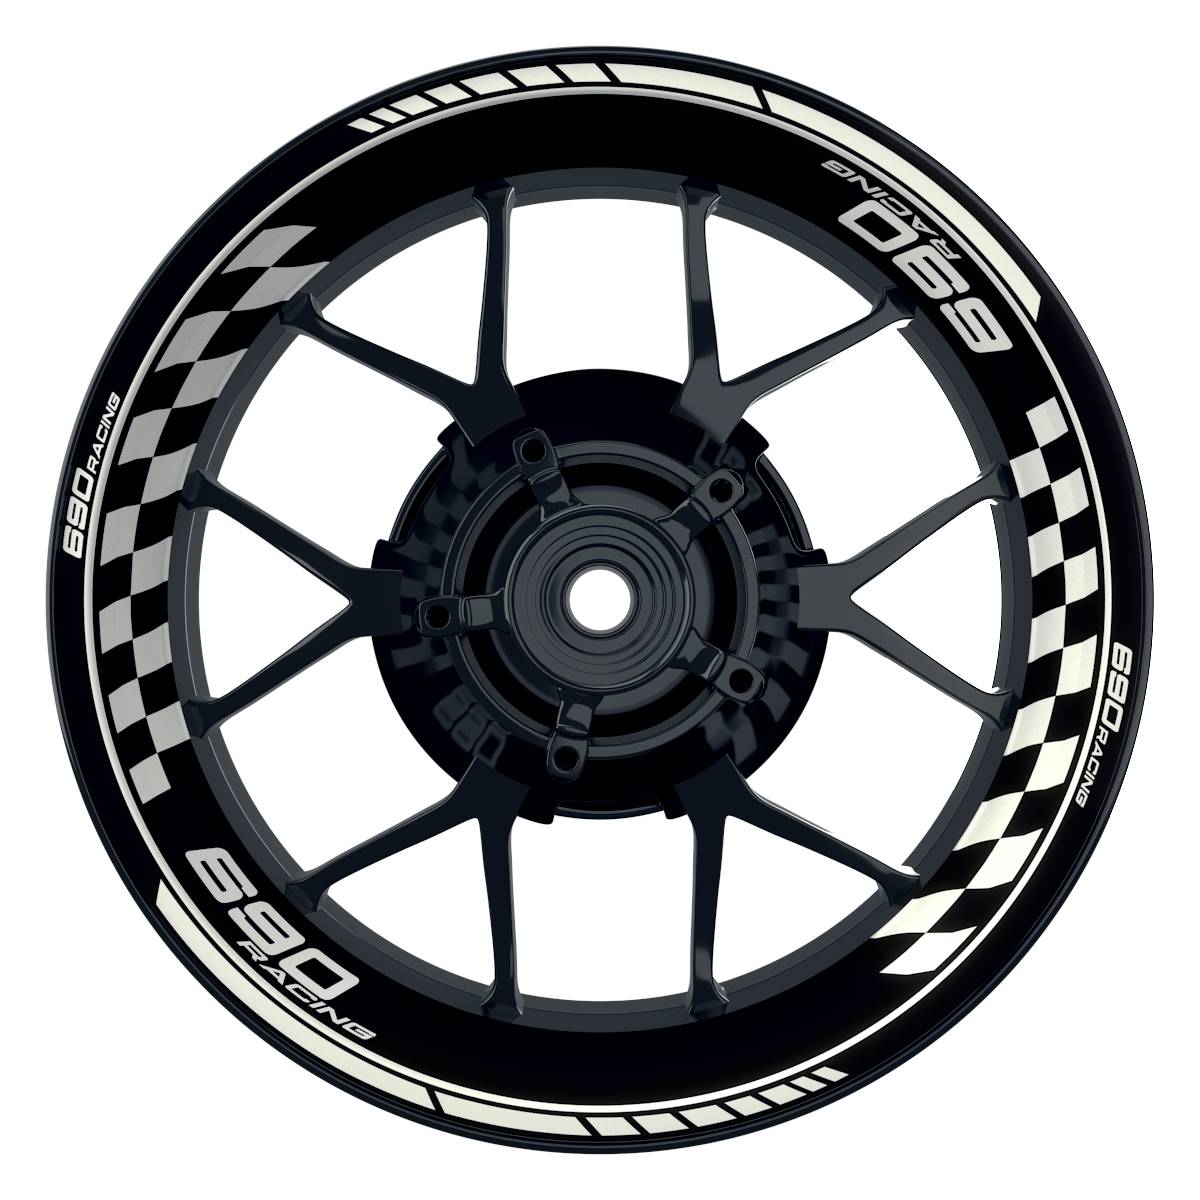 KTM 690RACING Grid schwarz weiss Wheelsticker Felgenaufkleber